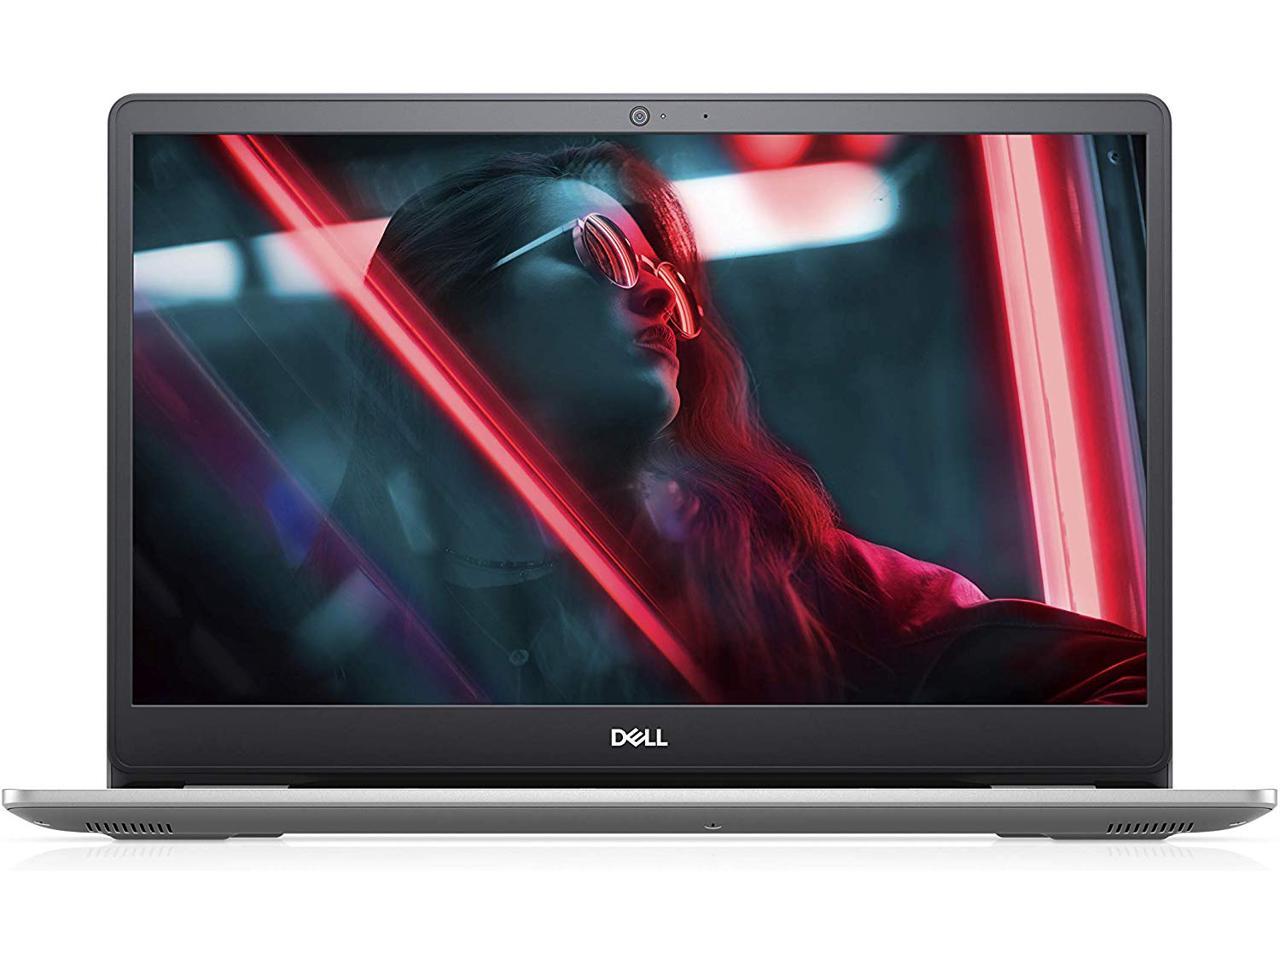 Dell Inspiron 15 Laptop: 10th Gen Core i5-1035G1, 256GB SSD, 8GB RAM, 15.6\" Full HD Display